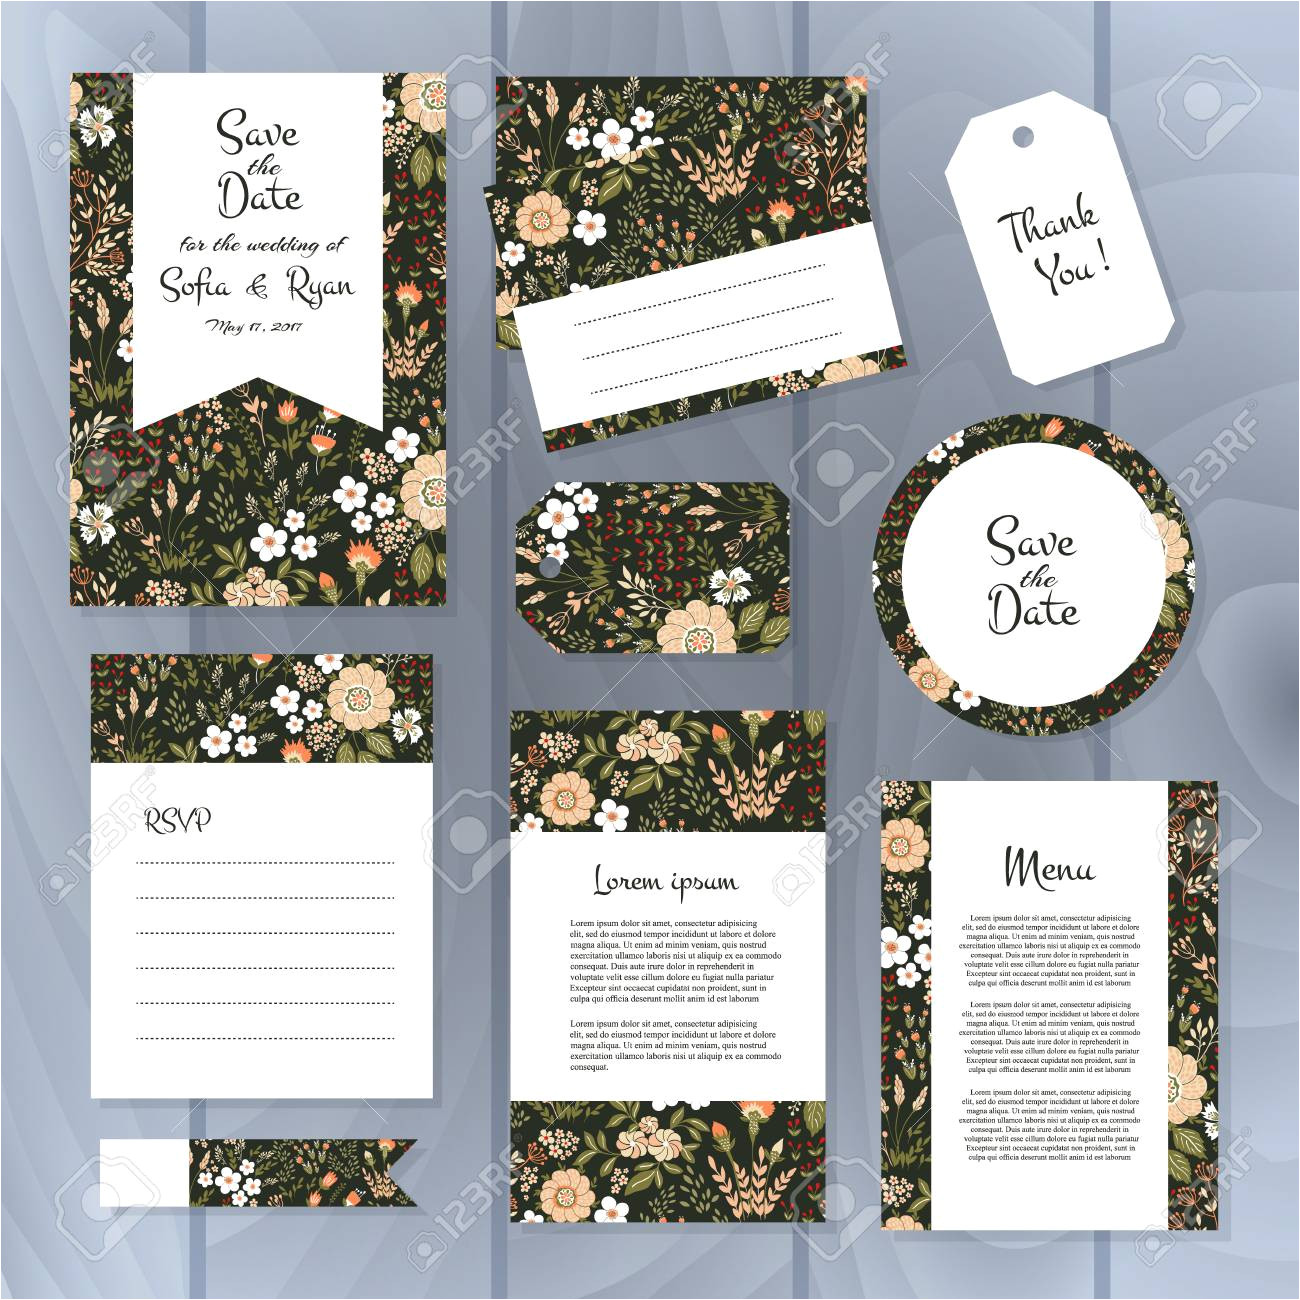 67943495 vector gentle wedding cards template with flower design wedding invitation or save the date rsvp men jpg